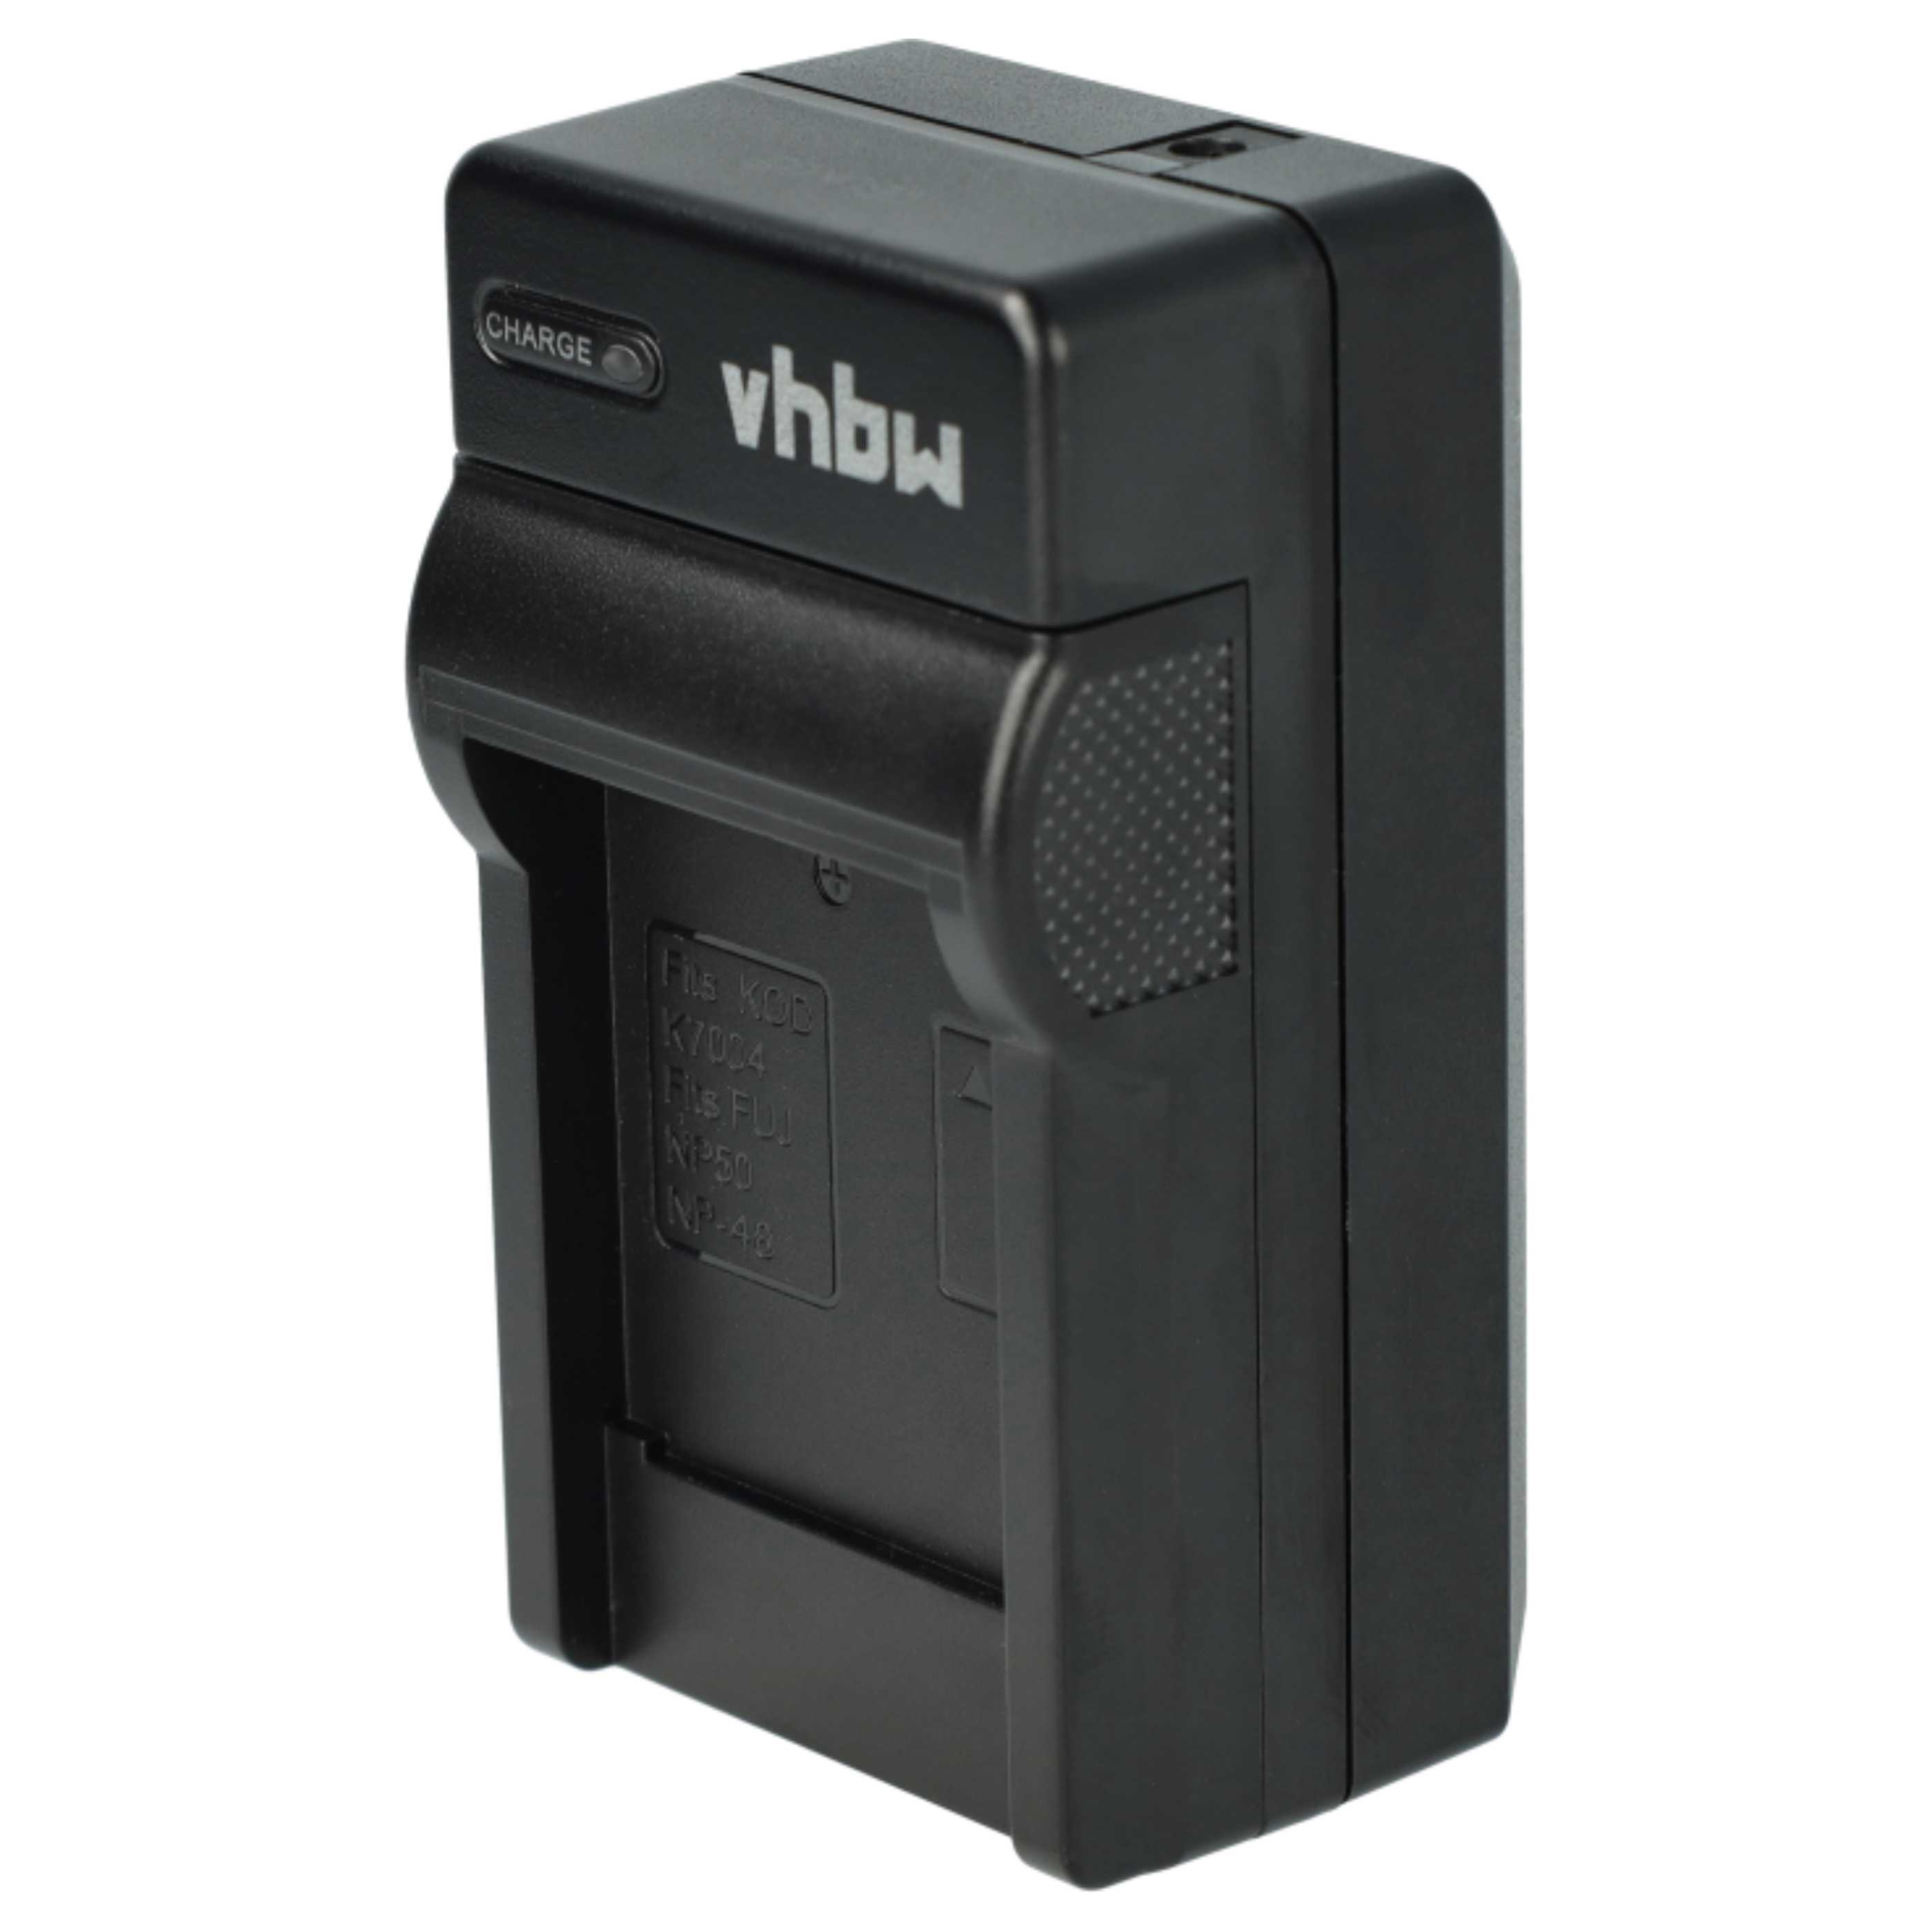 Akku Ladegerät passend für General Imaging GB-20 Kamera u.a. - 0,6 A, 4,2 V